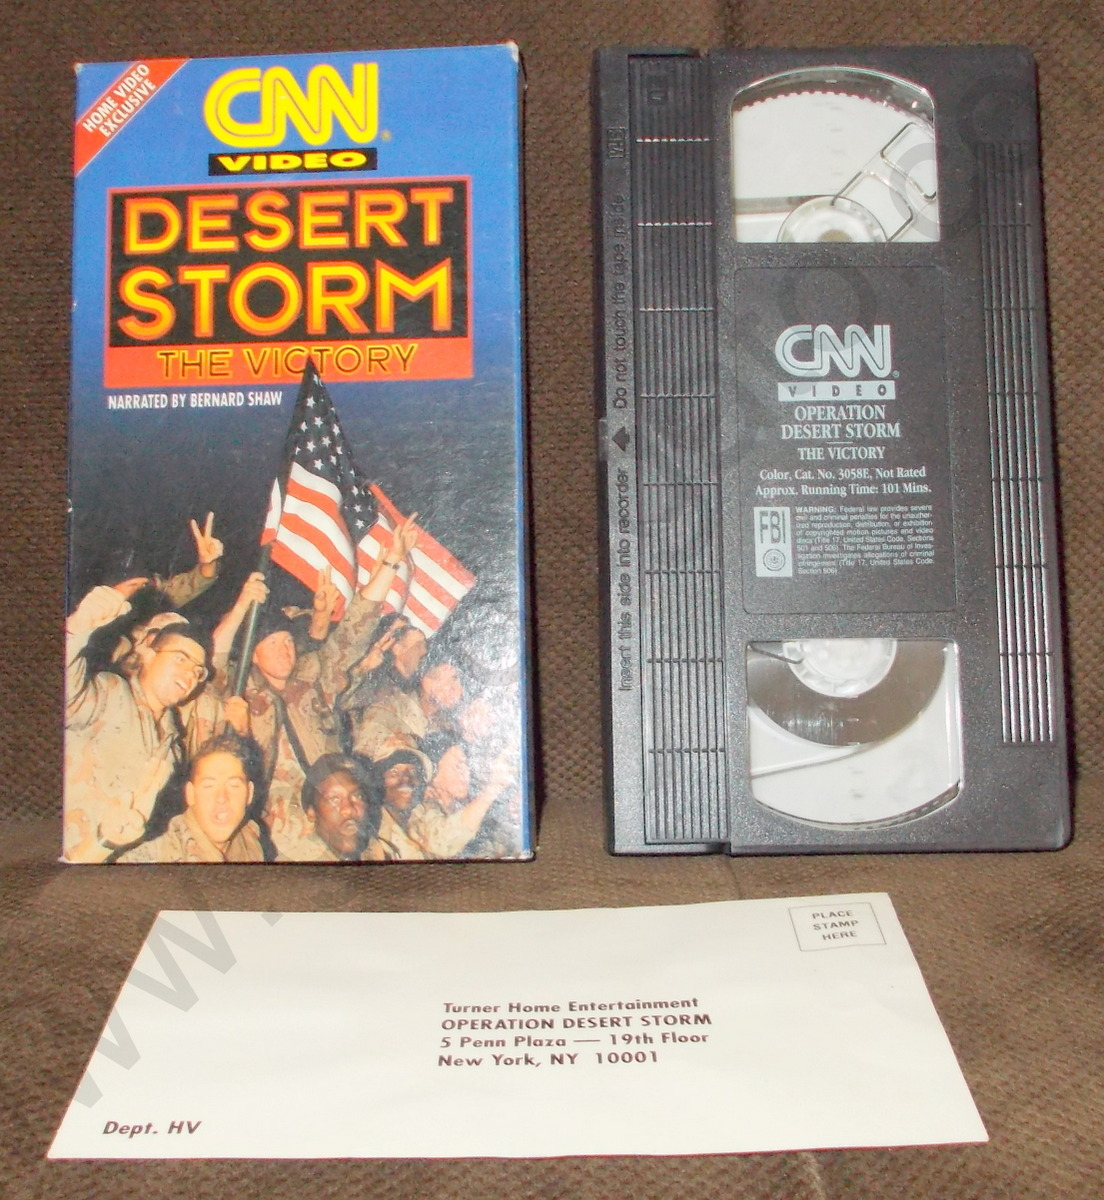 CNN Video - Desert Storm - The Victory (VHS, 1991)